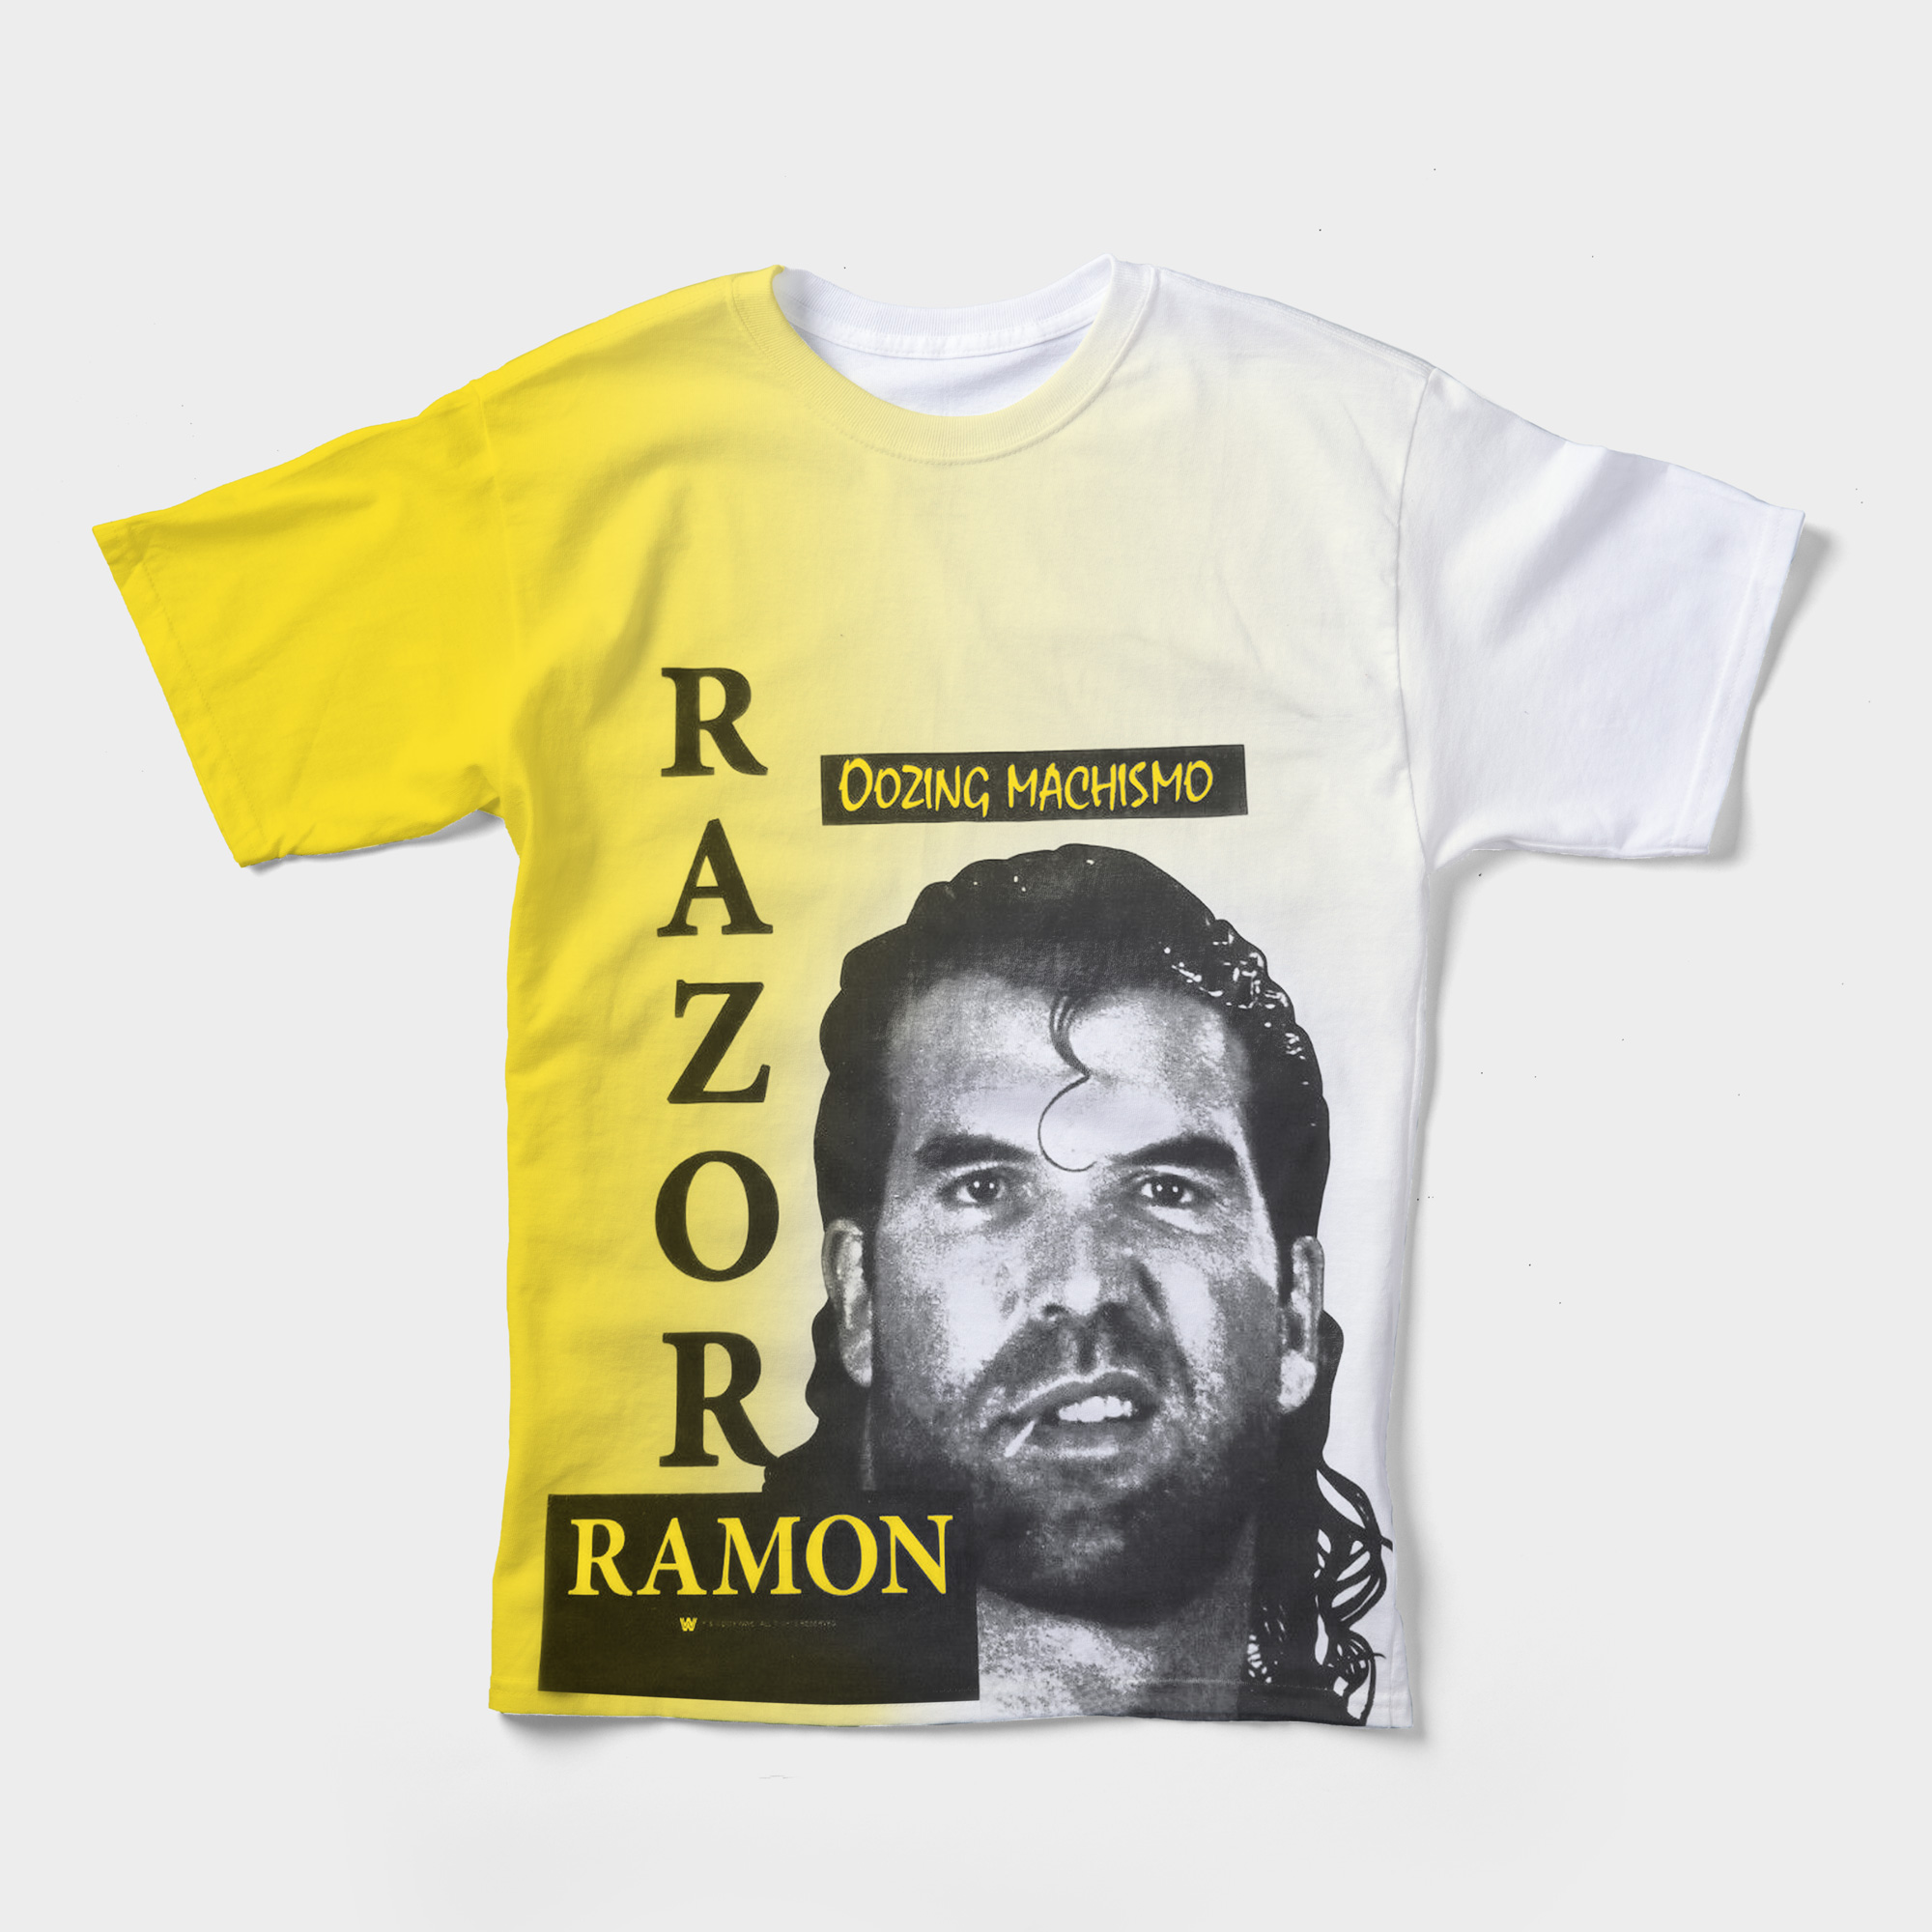 Razor Ramon's yellow t-shirt featuring his photo demonstrated his oozing machismo. 